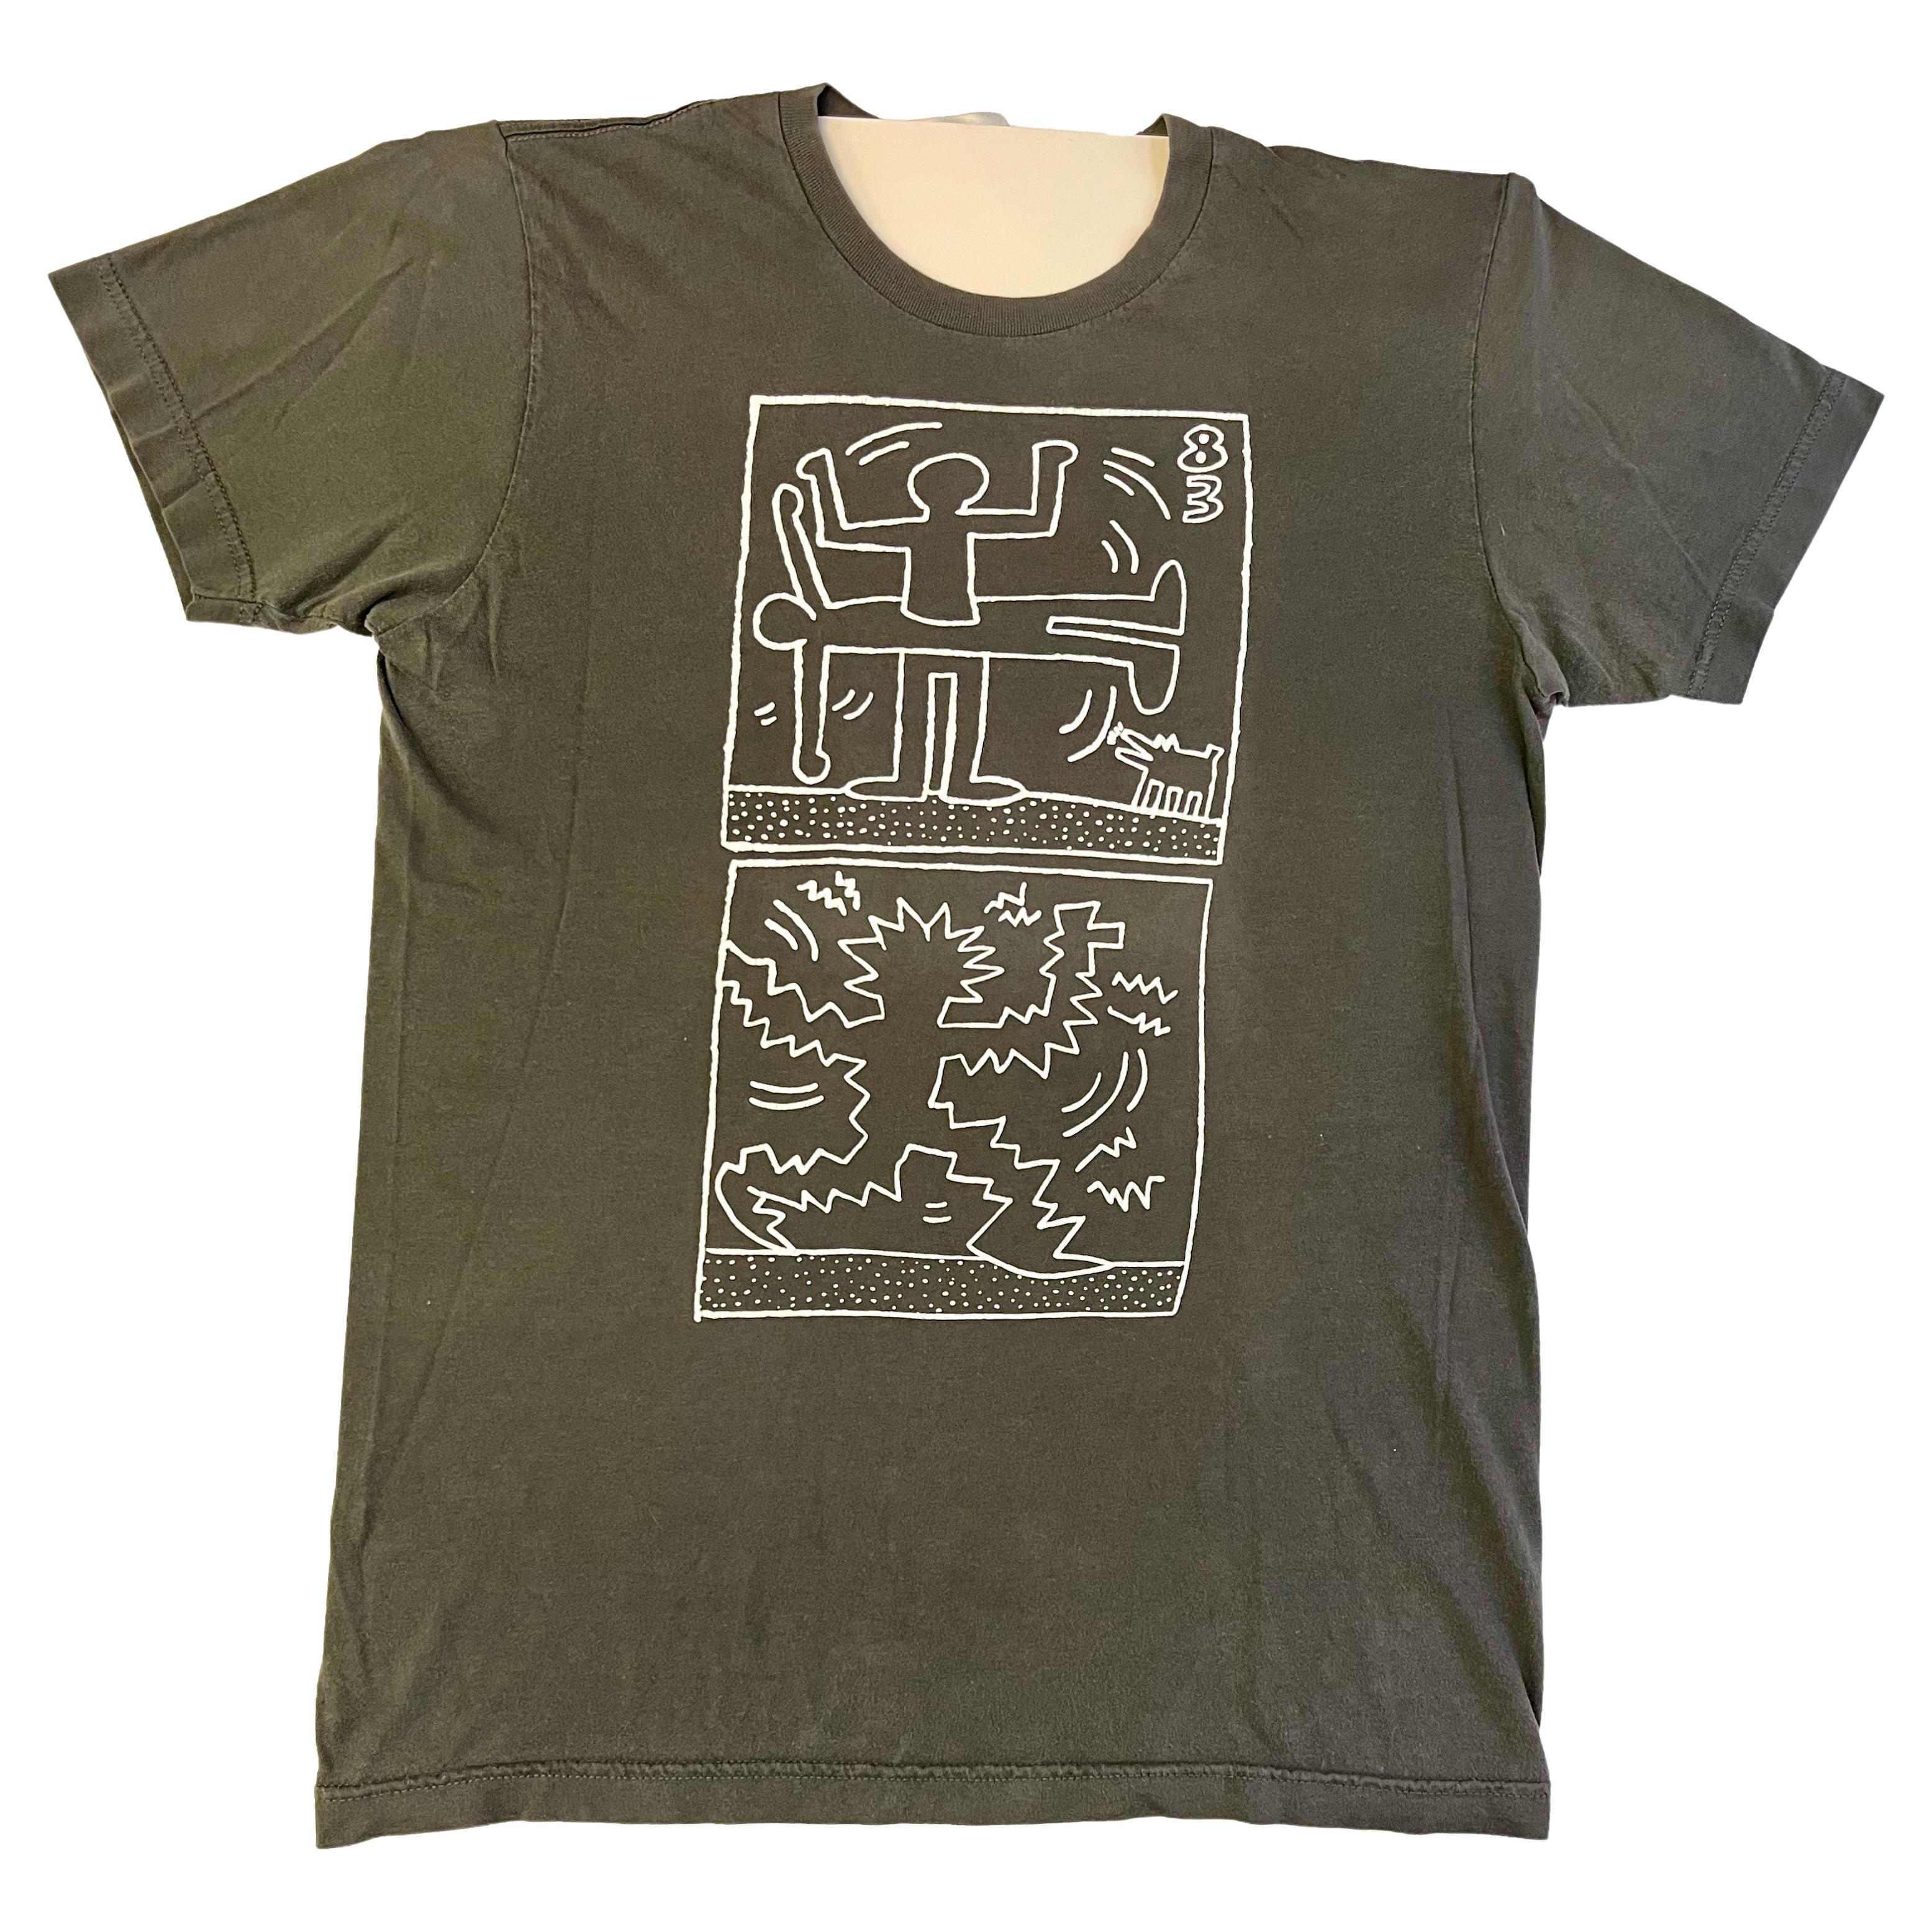 Vintage Keith Haring Pop Shop t-shirt